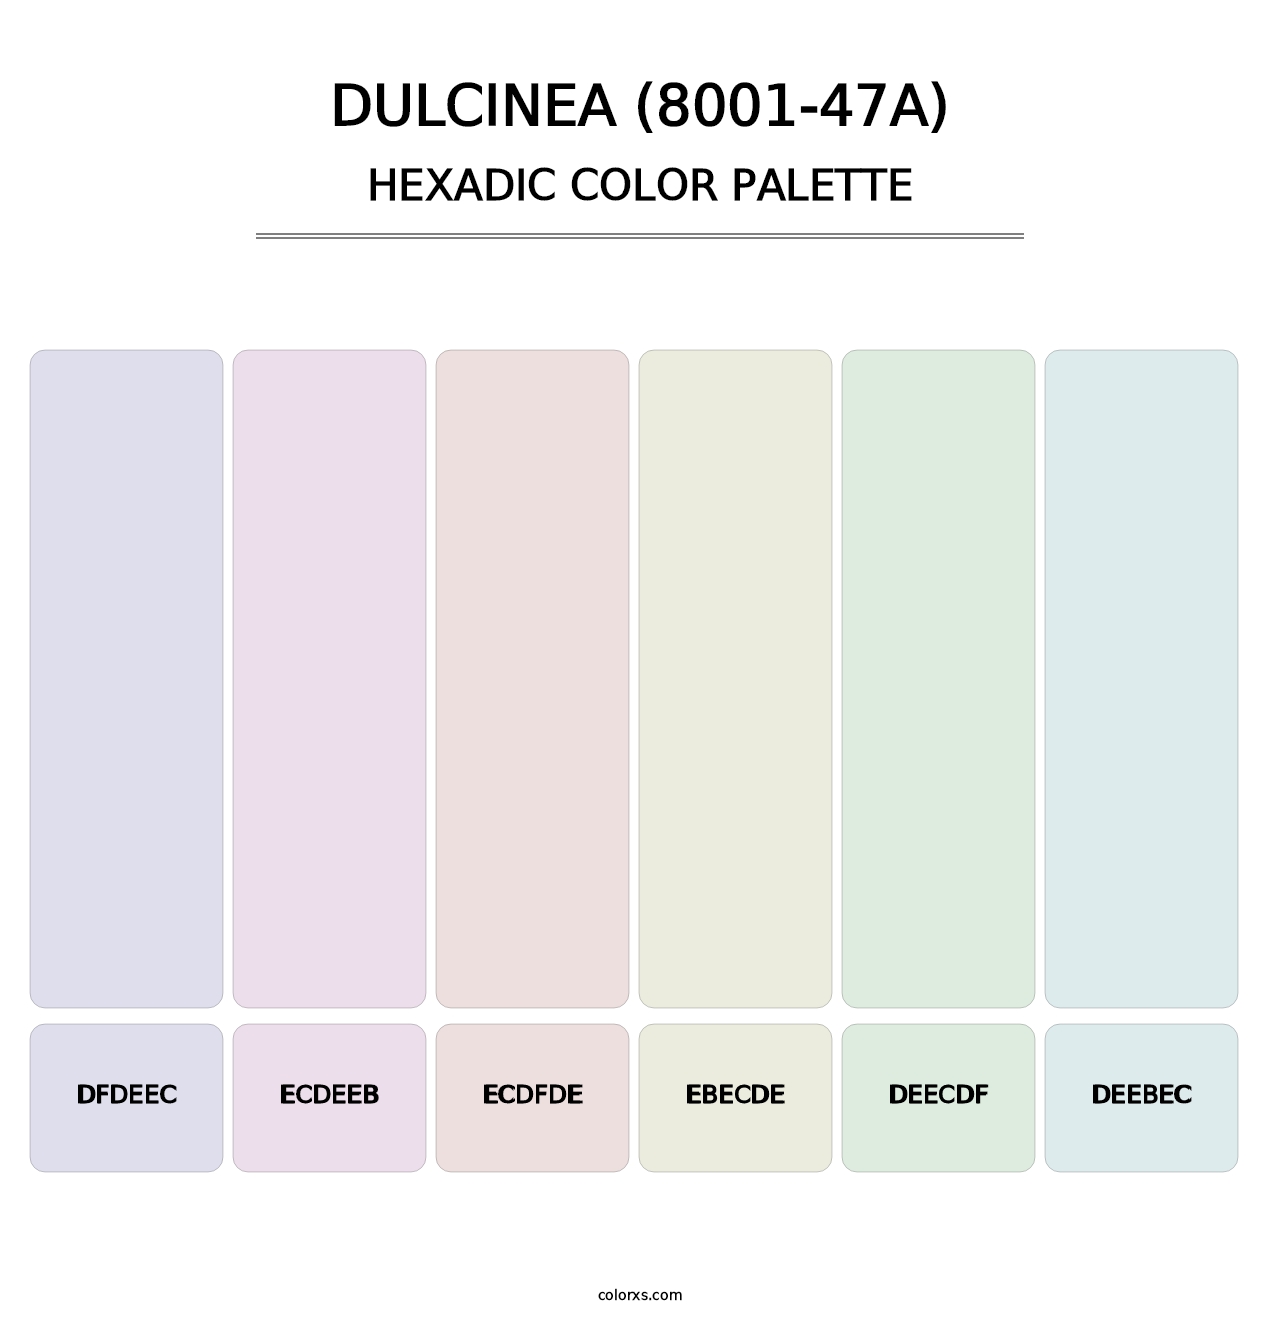 Dulcinea (8001-47A) - Hexadic Color Palette